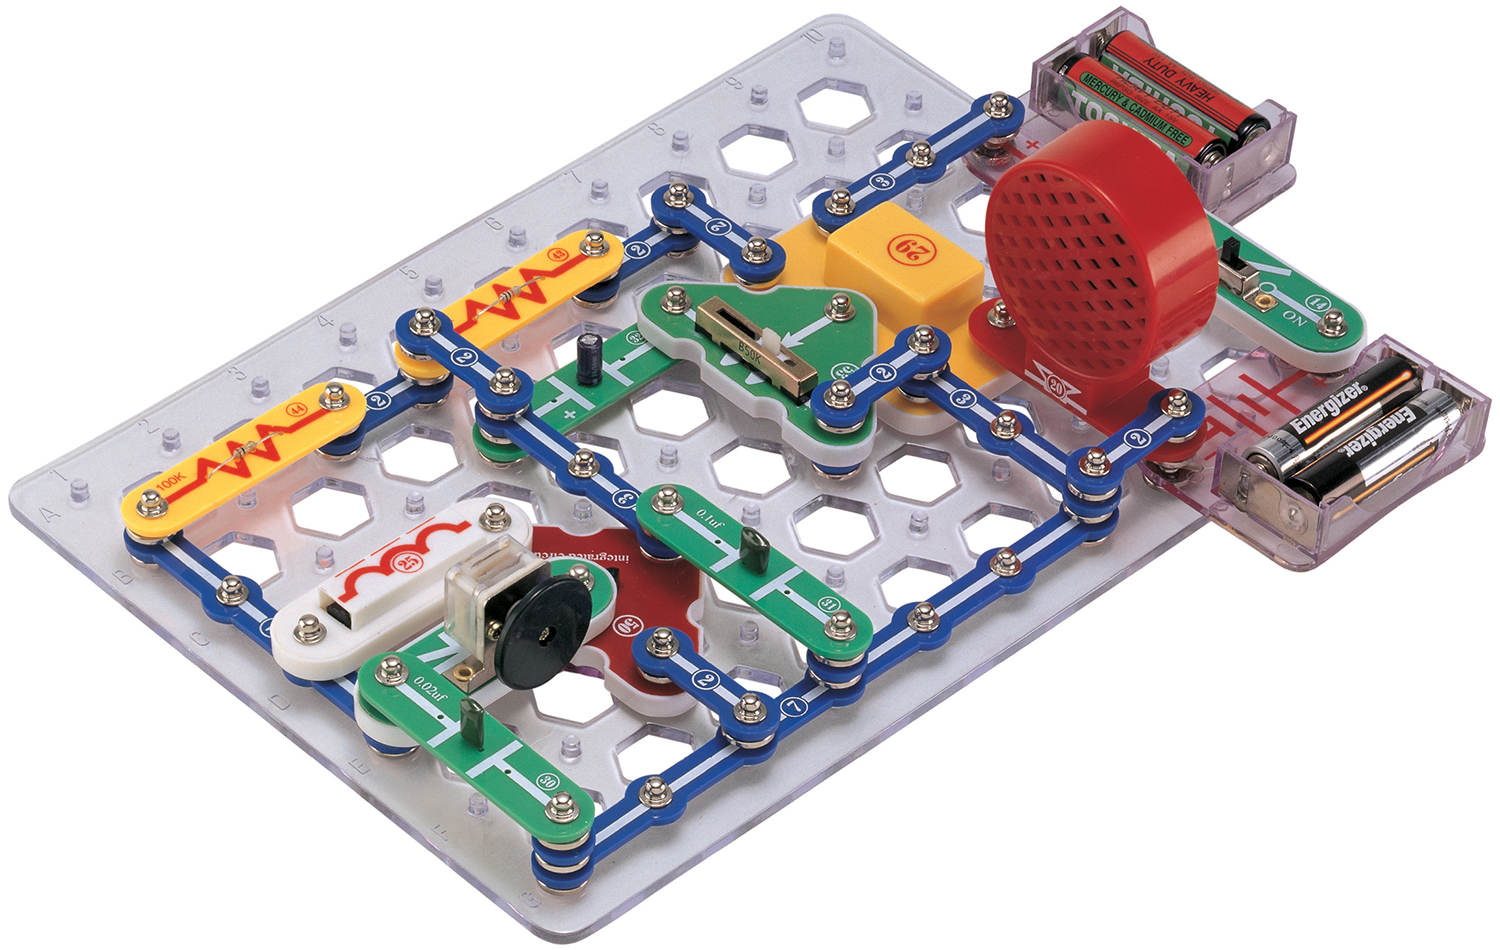  Snap Circuits Classic SC-300 Electronics Exploration